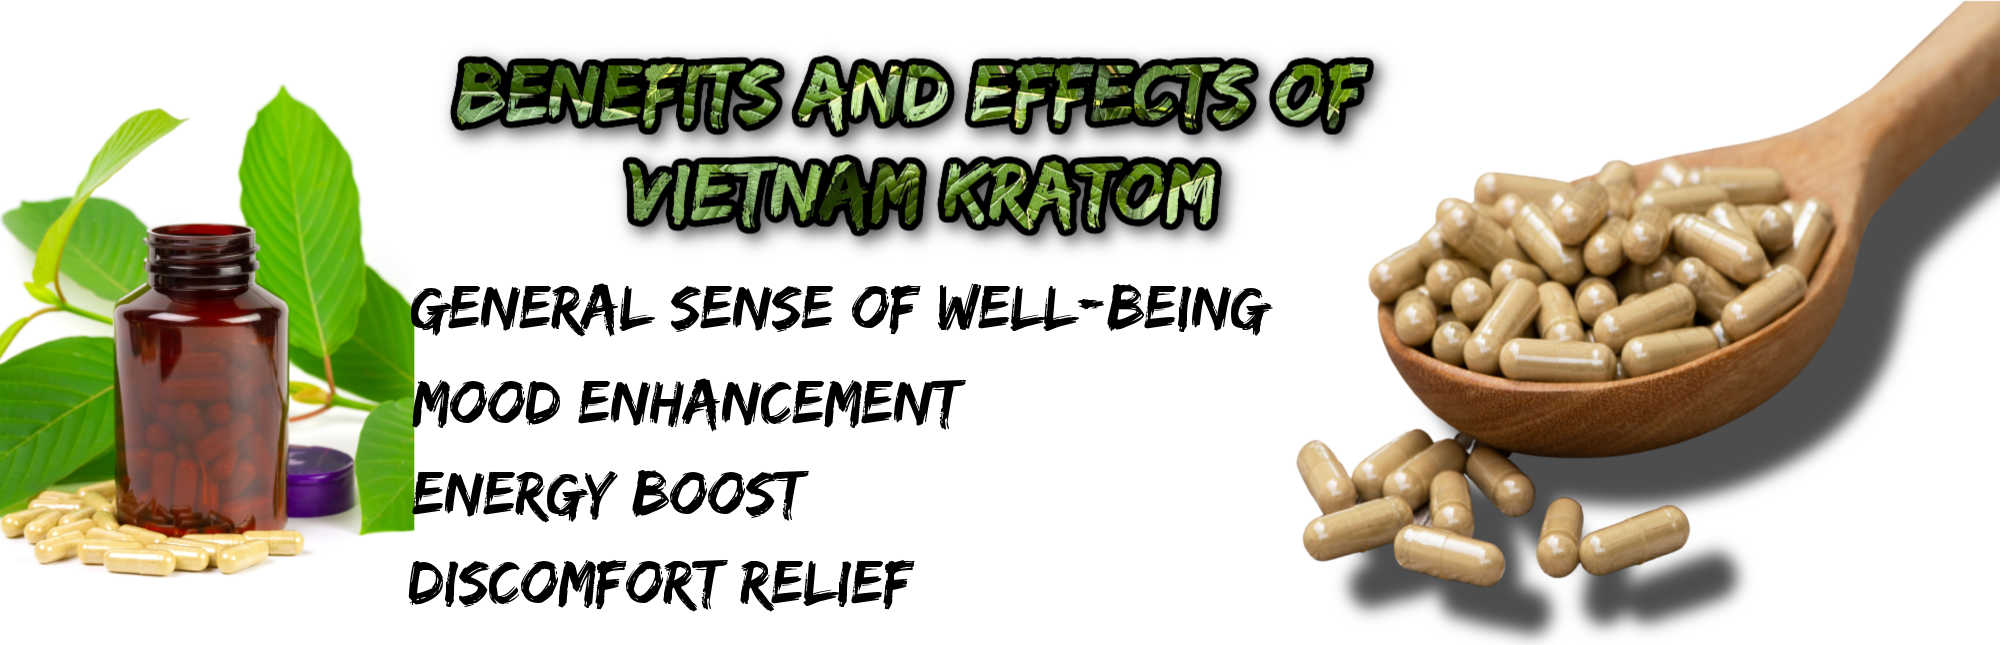 image of vietnam kratom benefits and effects